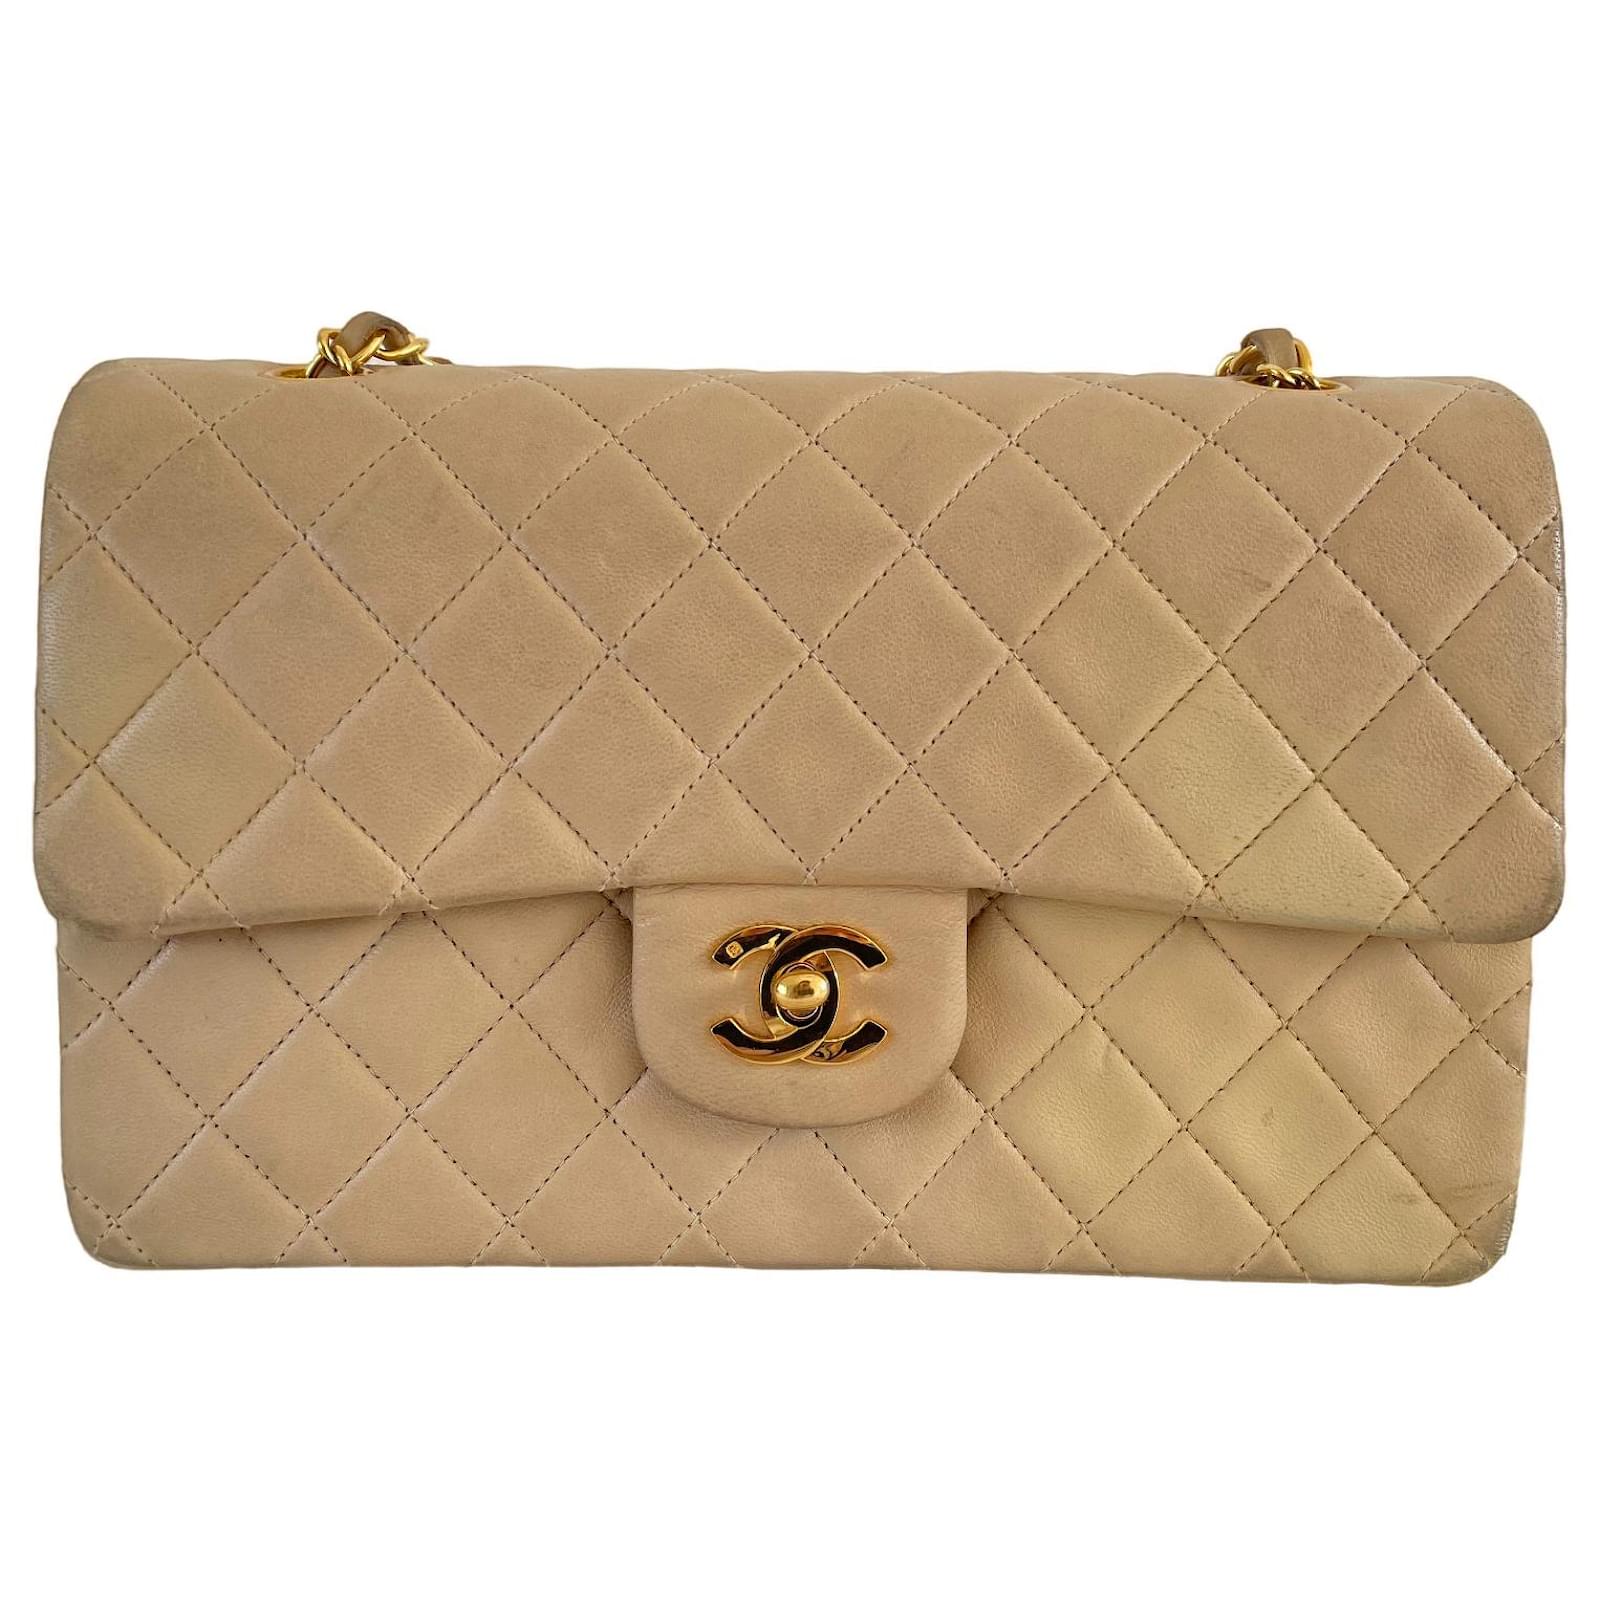 Chanel classic lined flap medium lambskin gold hardware timeless